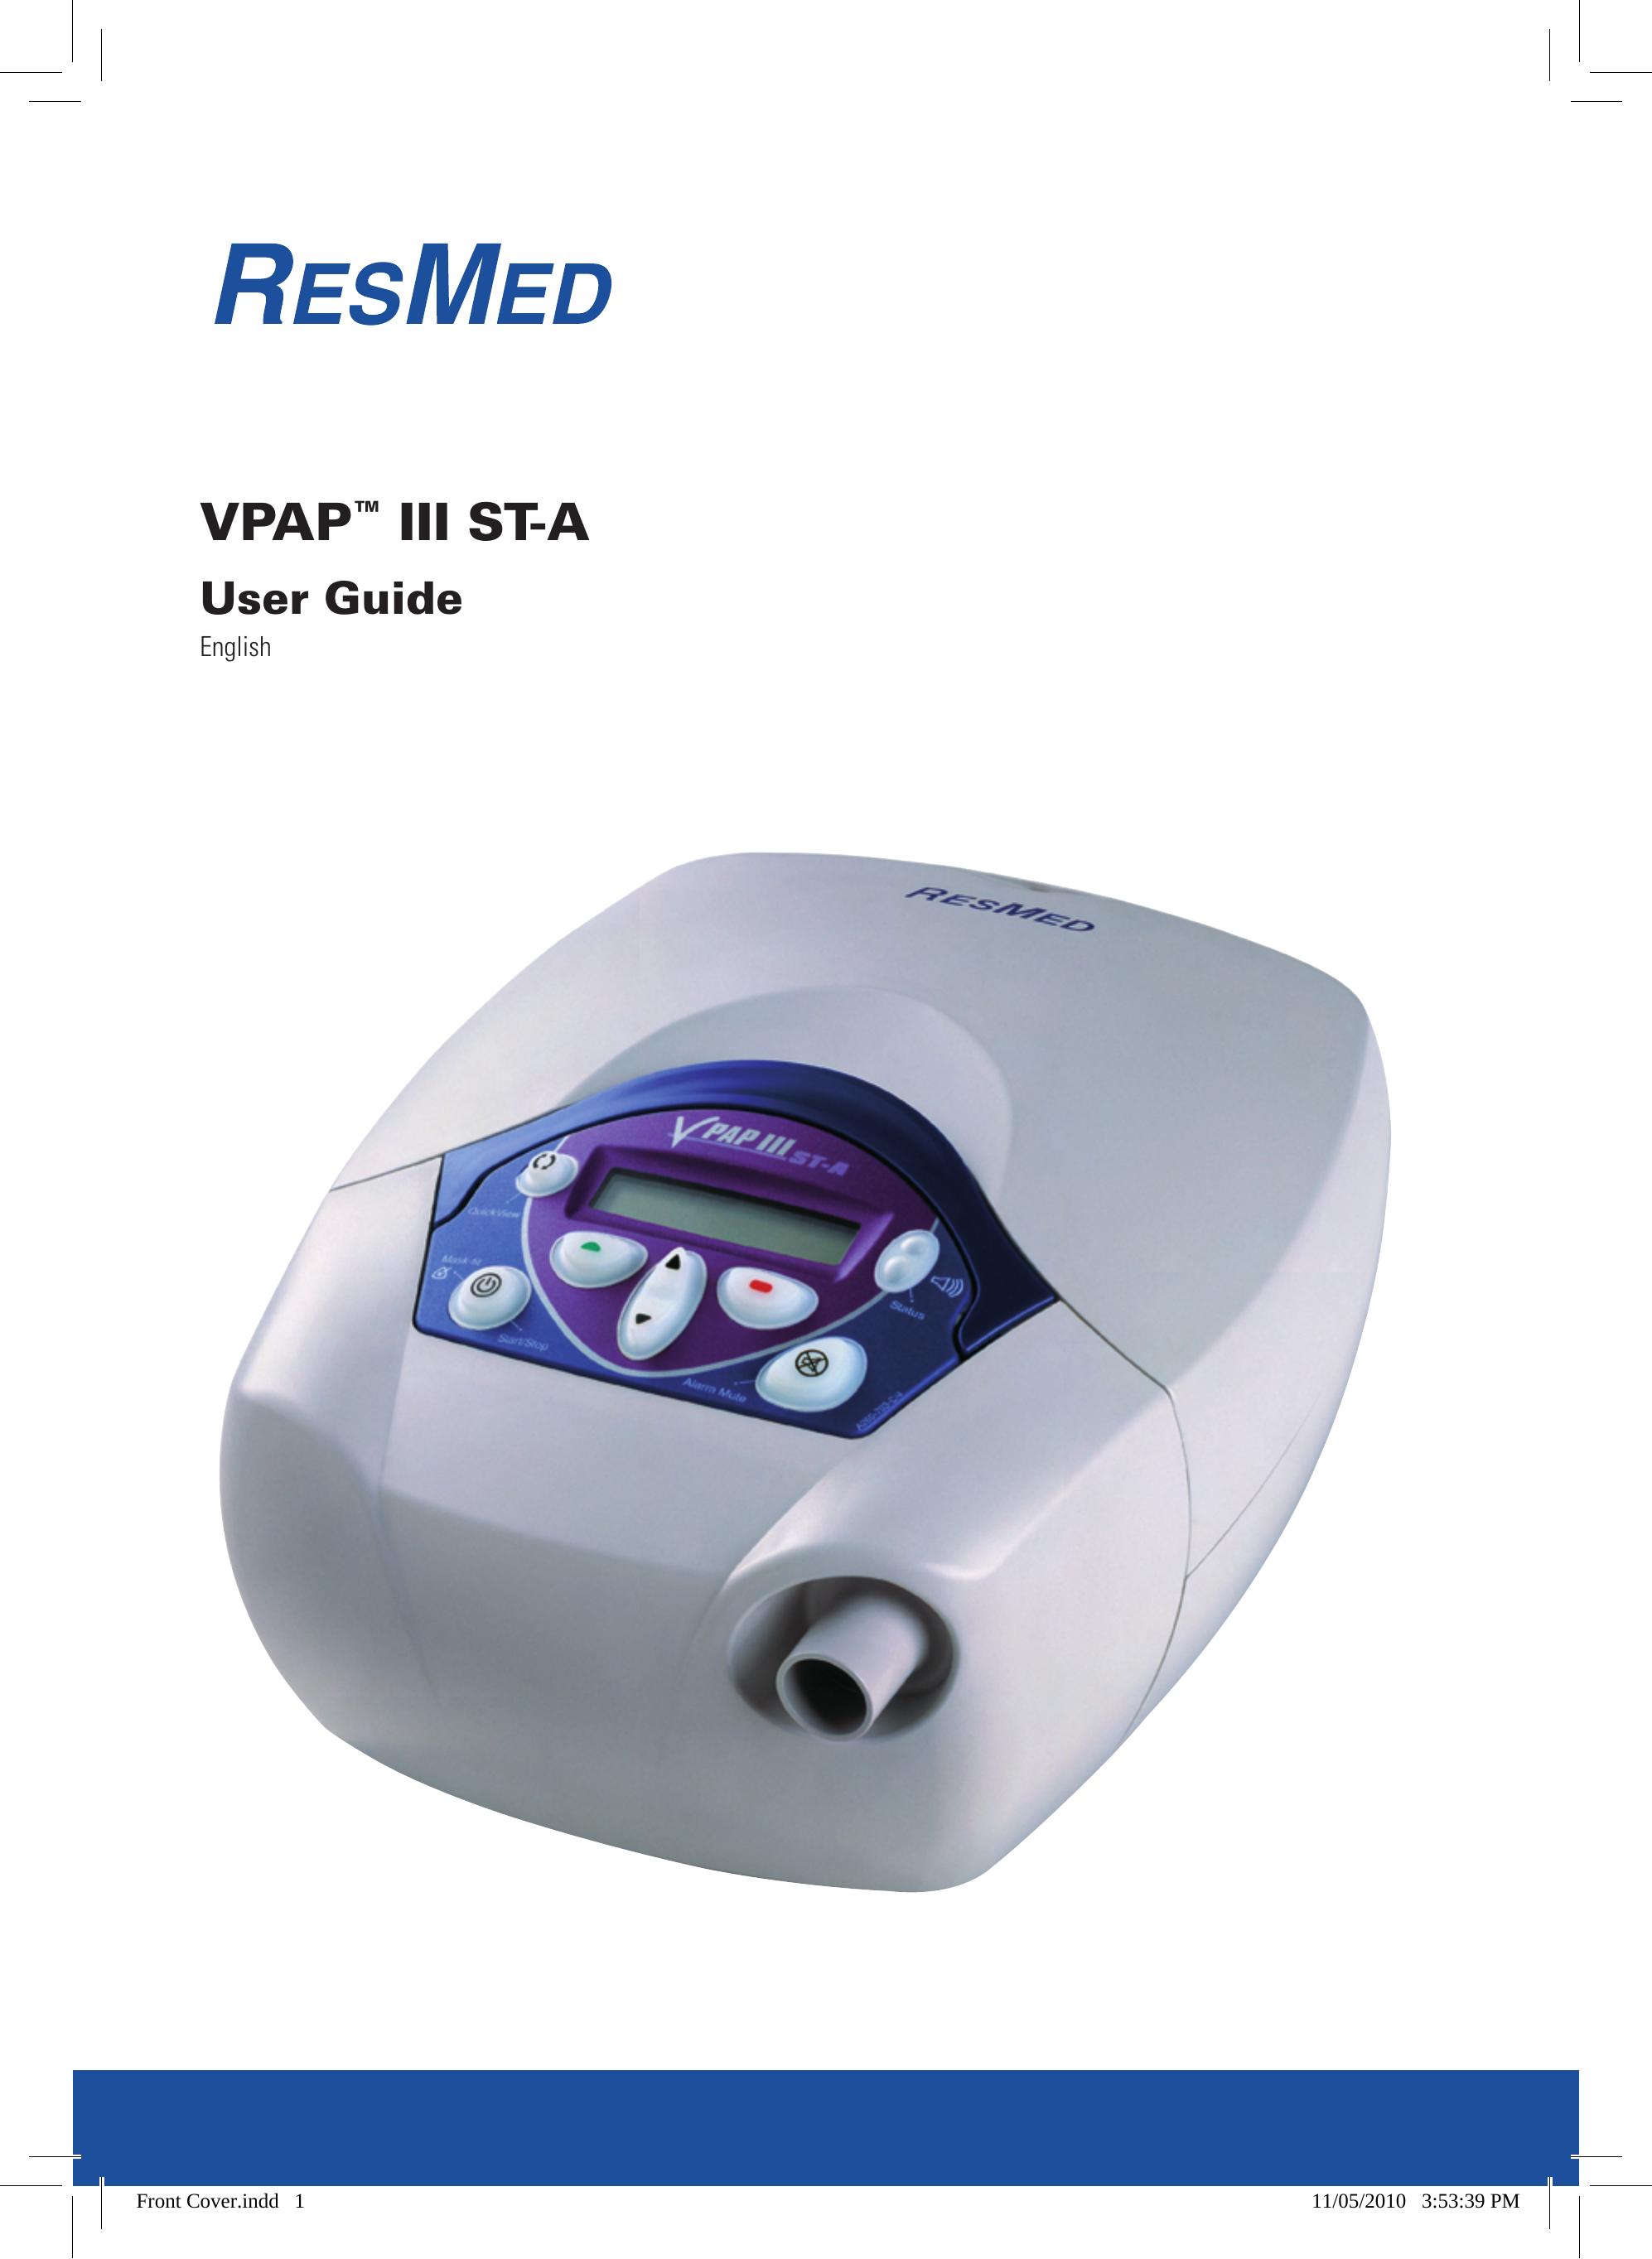 ResMed VPAP III ST-A Sleep Apnea Machine User Manual